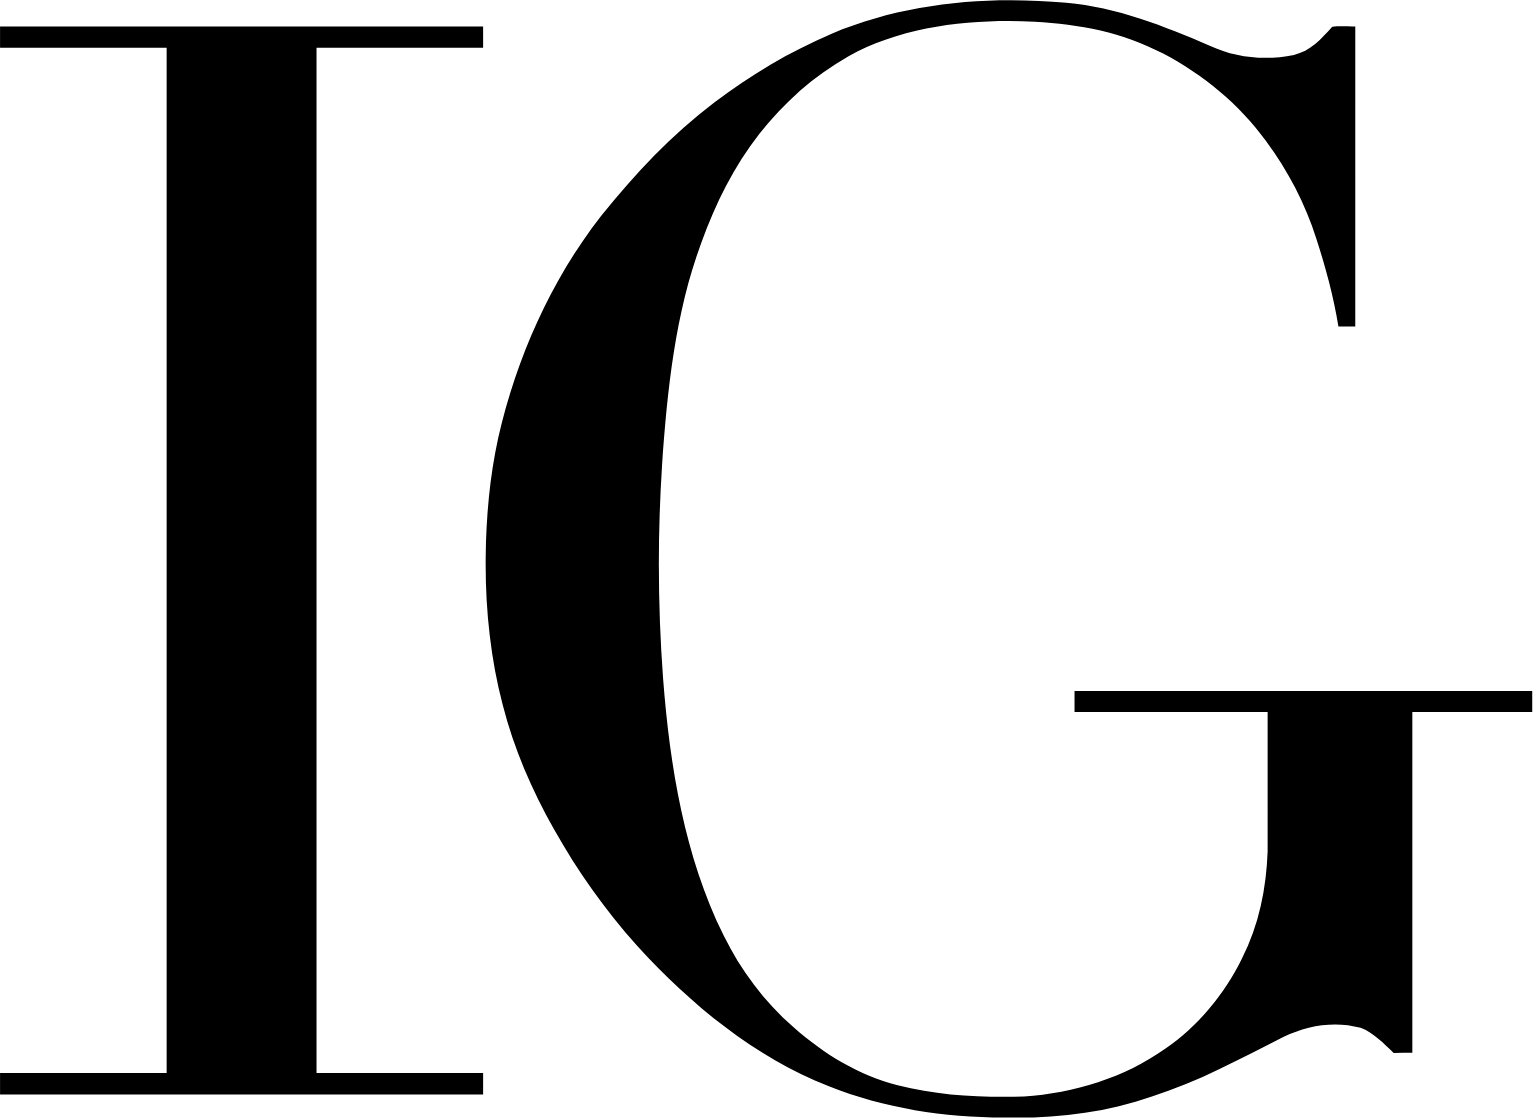 Iguatemi logo (PNG transparent)